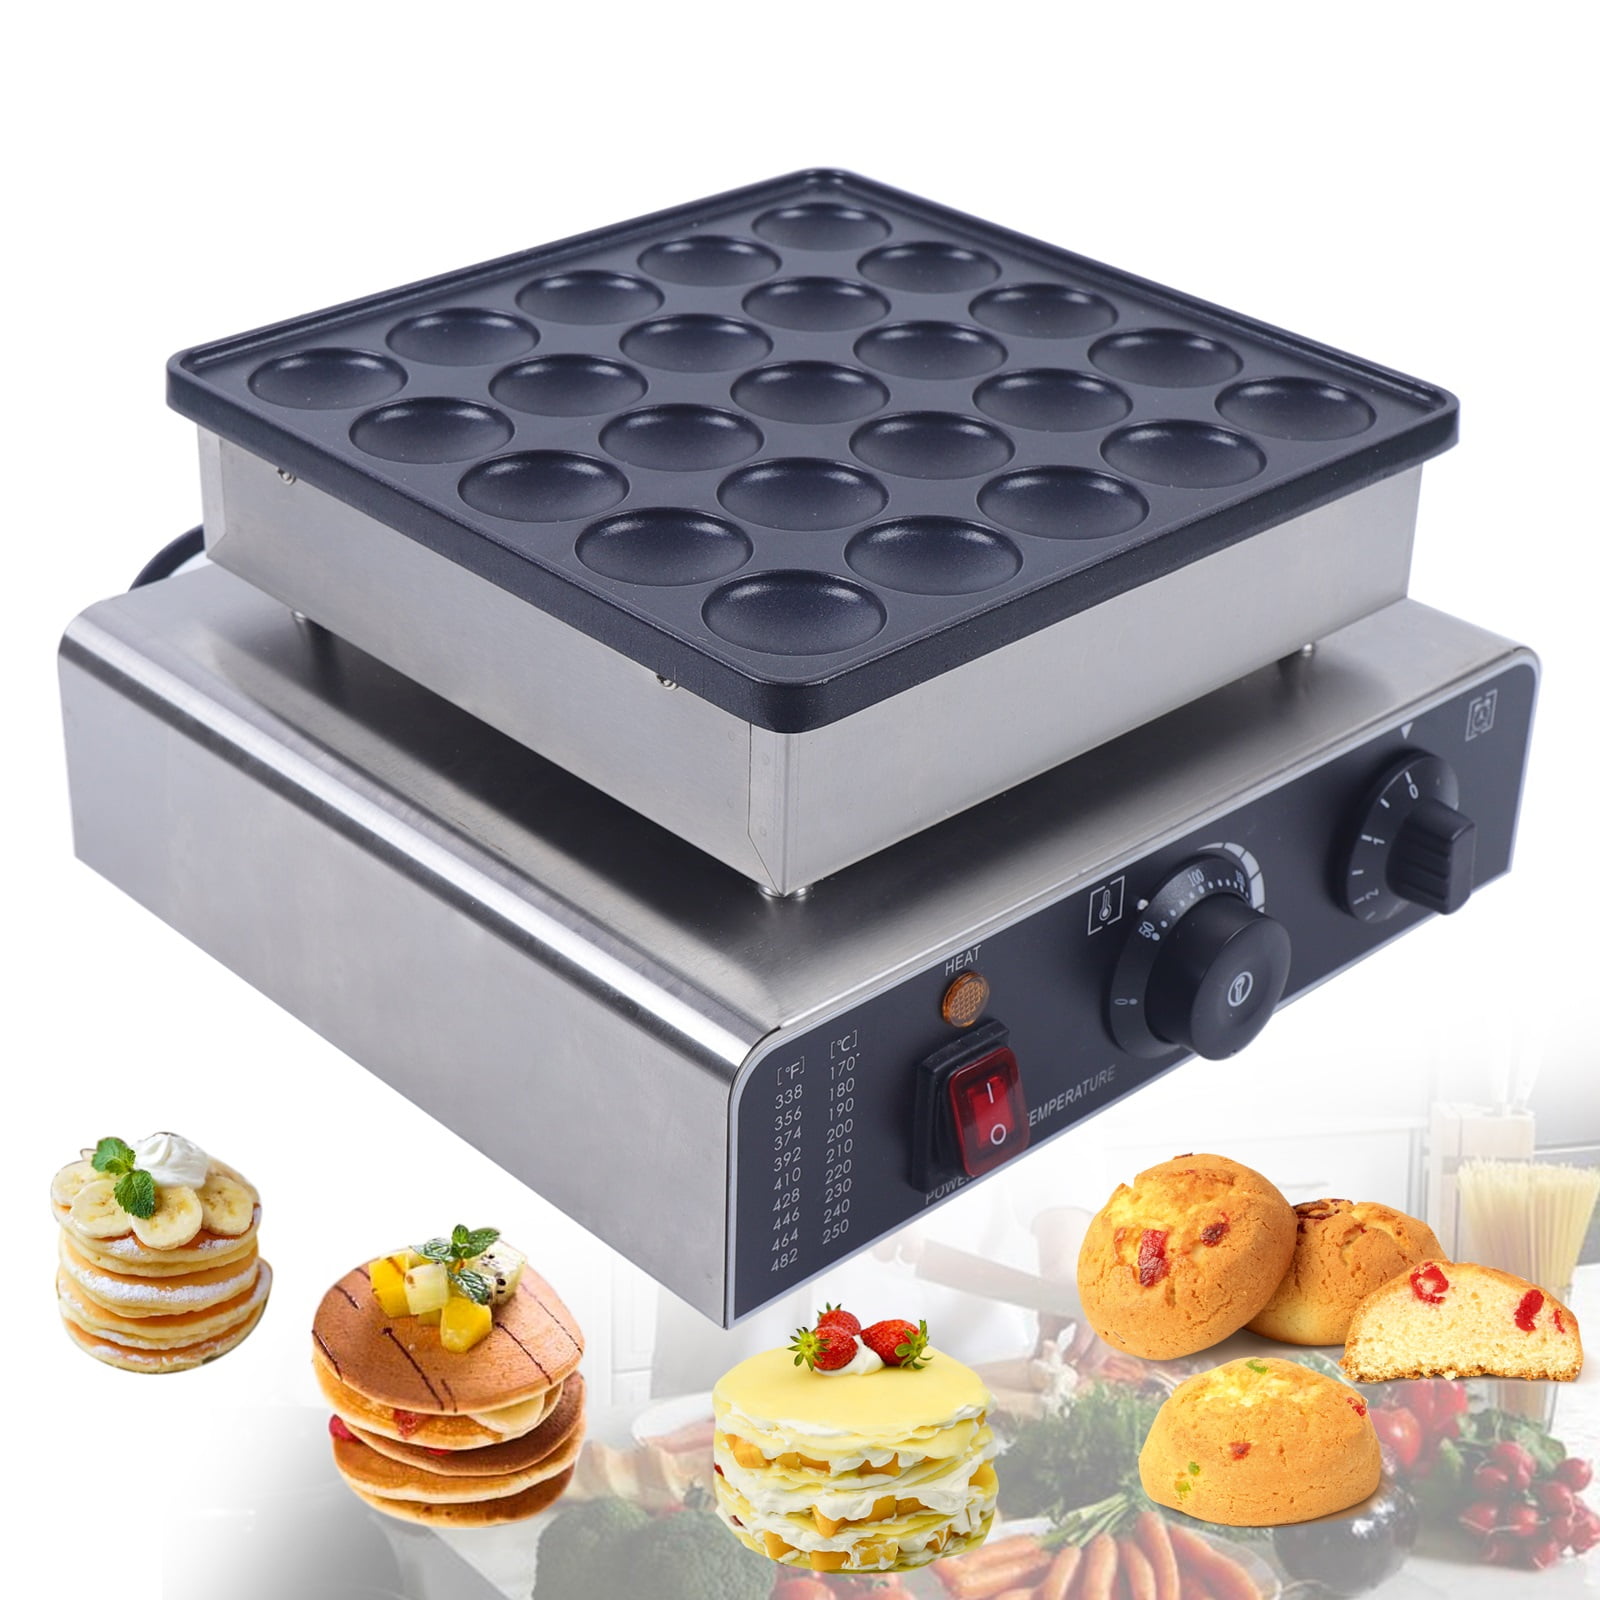 Mini Pancake Maker - 25 pieces - Ø4,5cm Each - Maxima